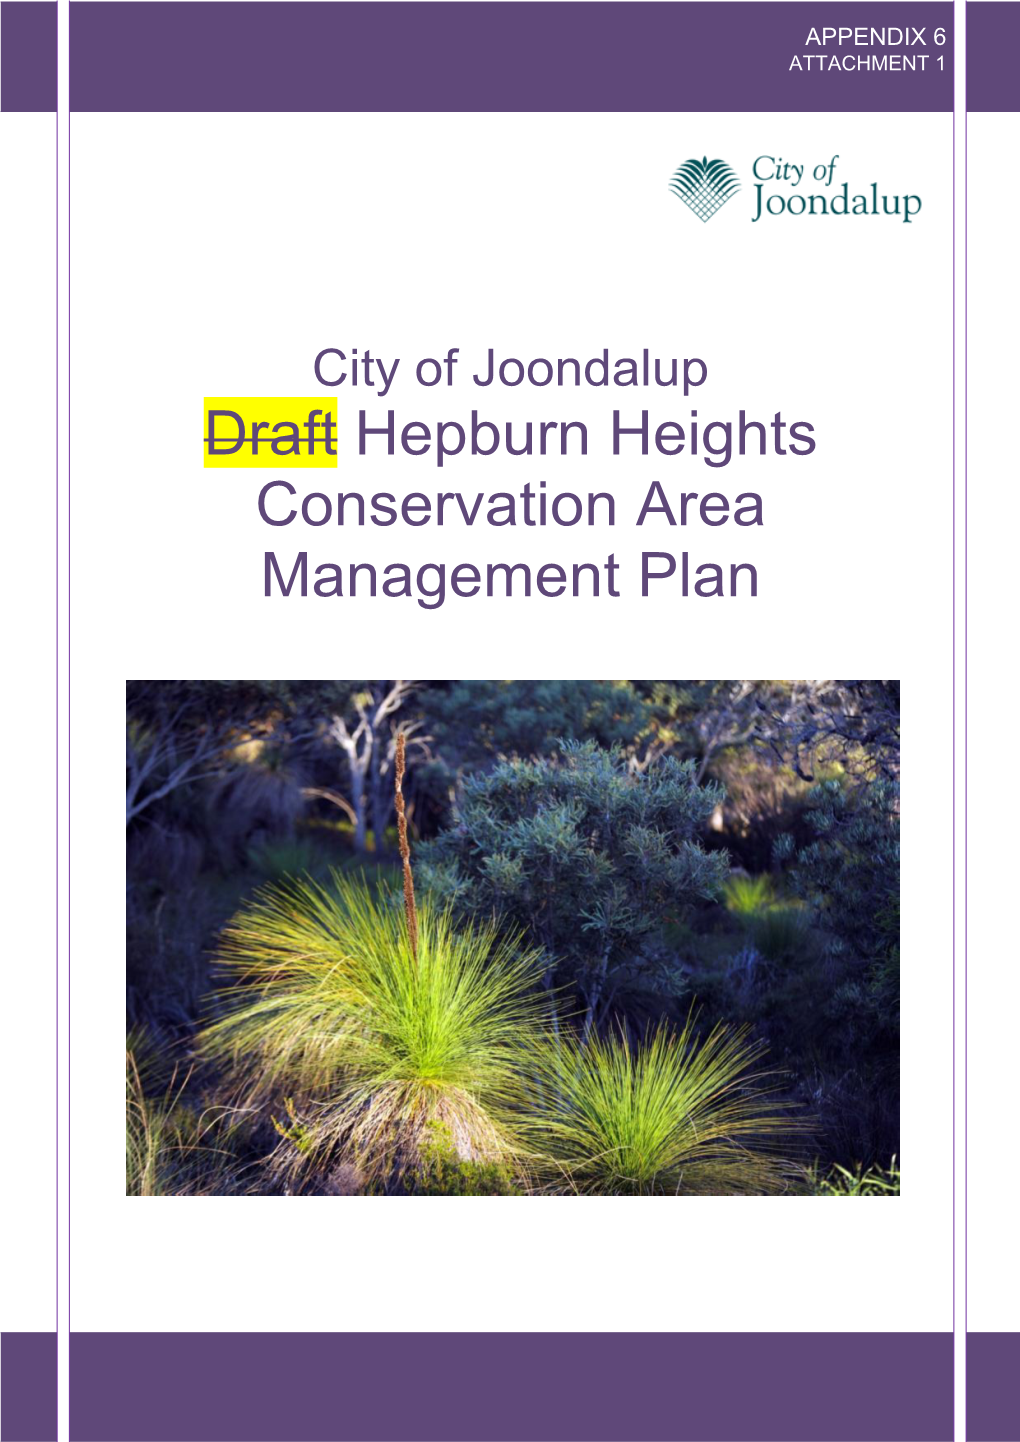 Draft Hepburn Heights Conservation Area Management Plan